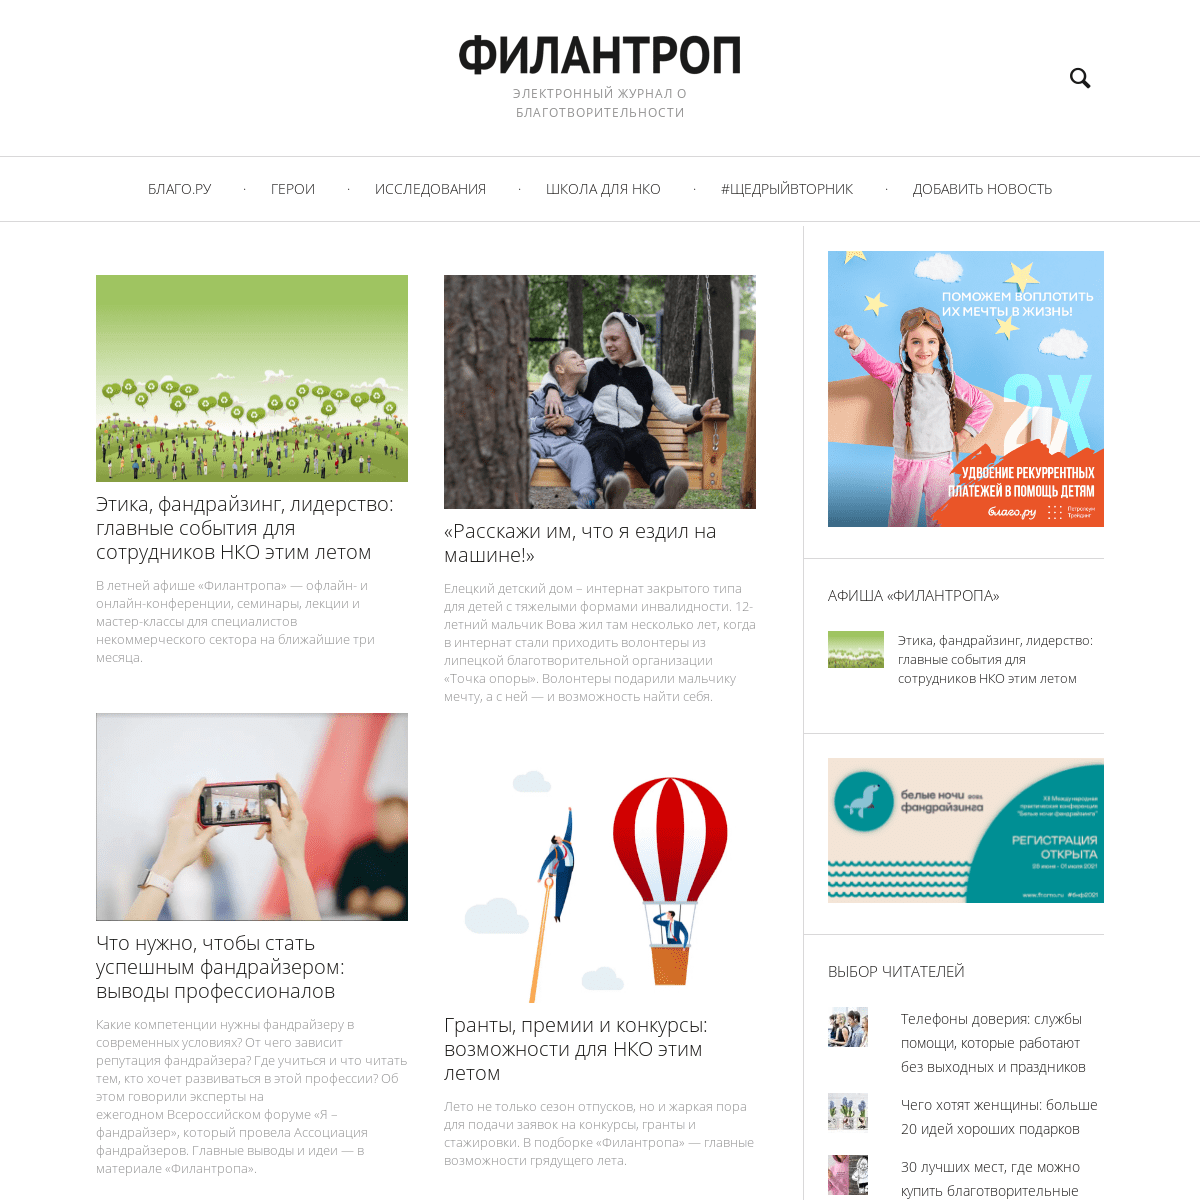 A complete backup of https://philanthropy.ru